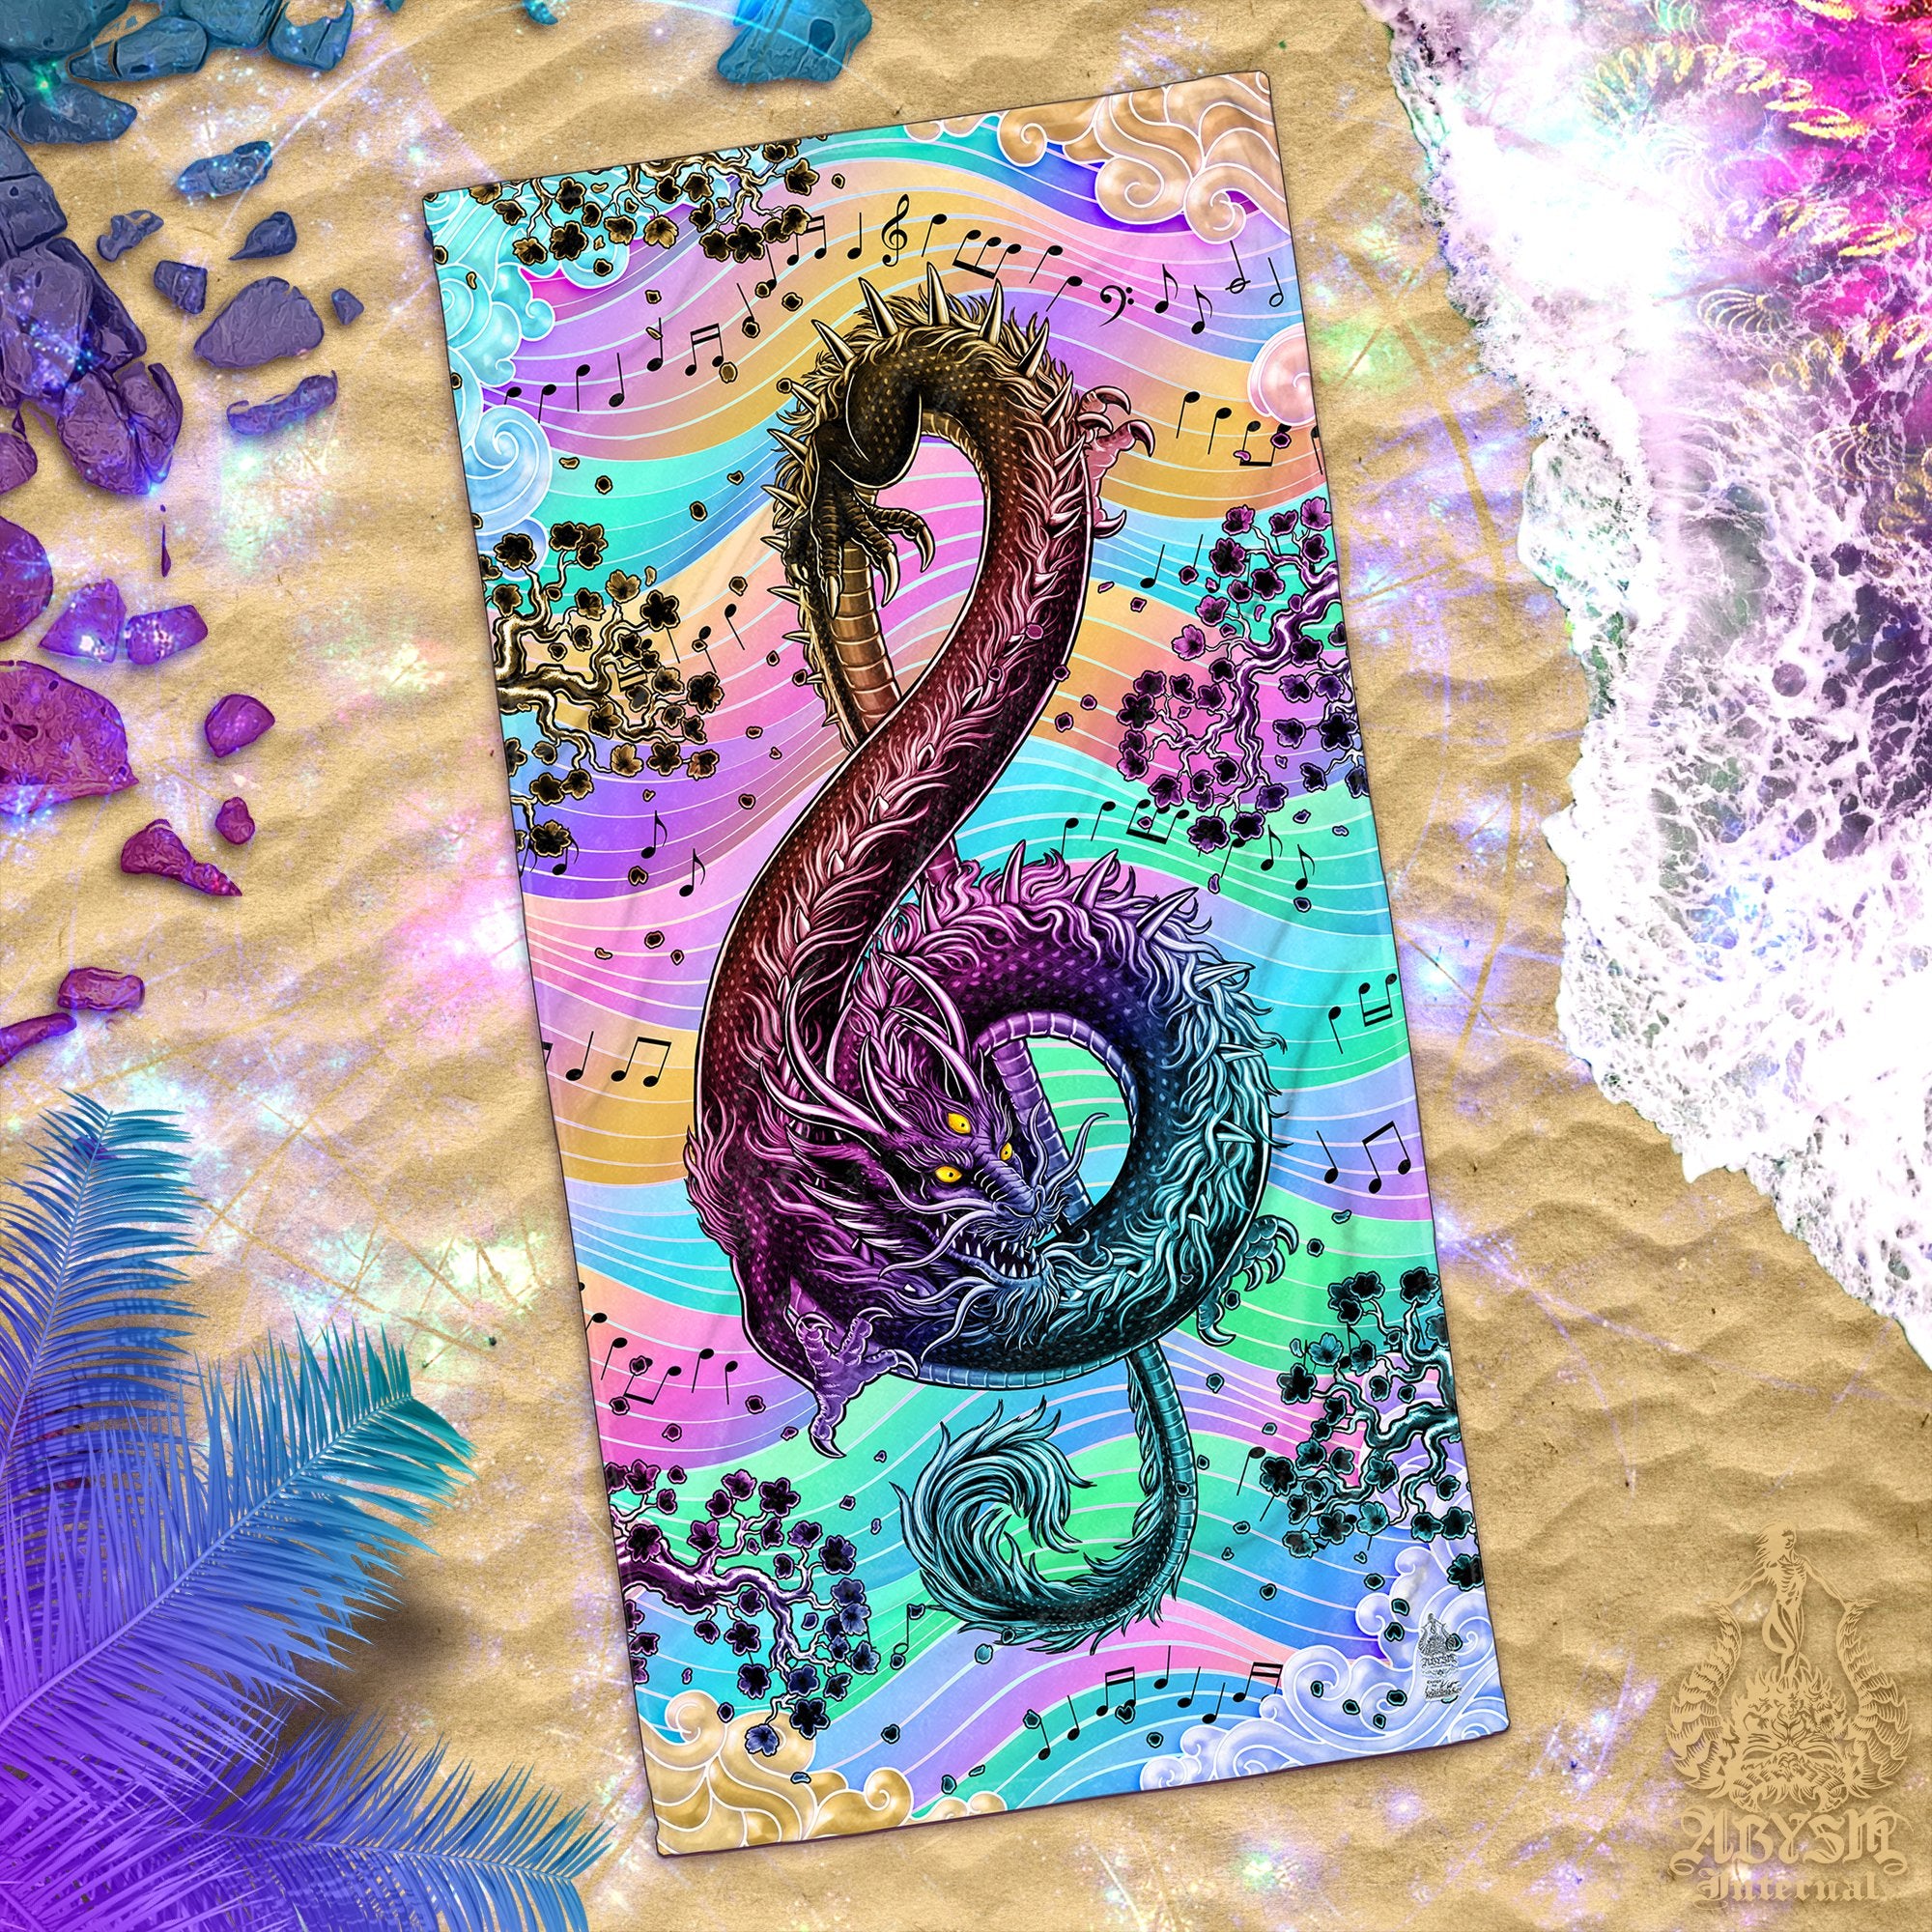 ALL Pastel Black Beach Towel, Aesthetic Punk, Gift for Gamer - Kitsune, Medusa, Music Dragon, Octopus, Spider, 6 Designs - Abysm Internal